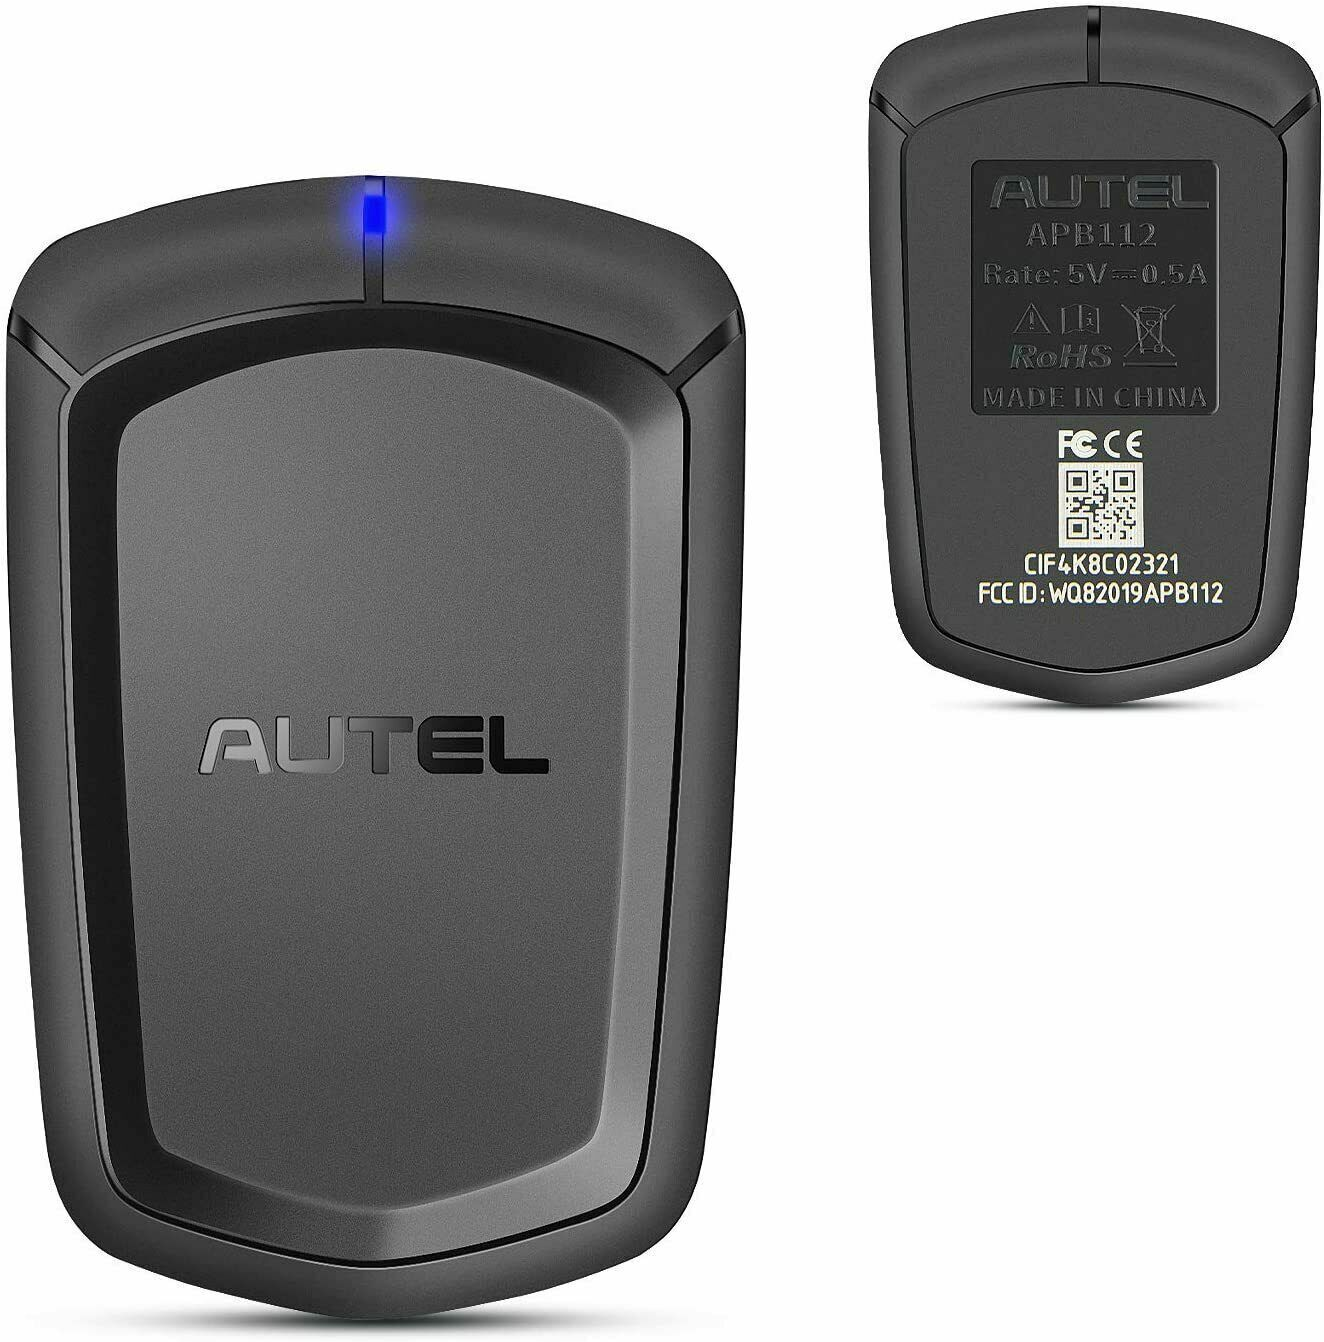 Autel APB112 Smart Key Simulator Works for Autel MaxiIM IM608/ IM508